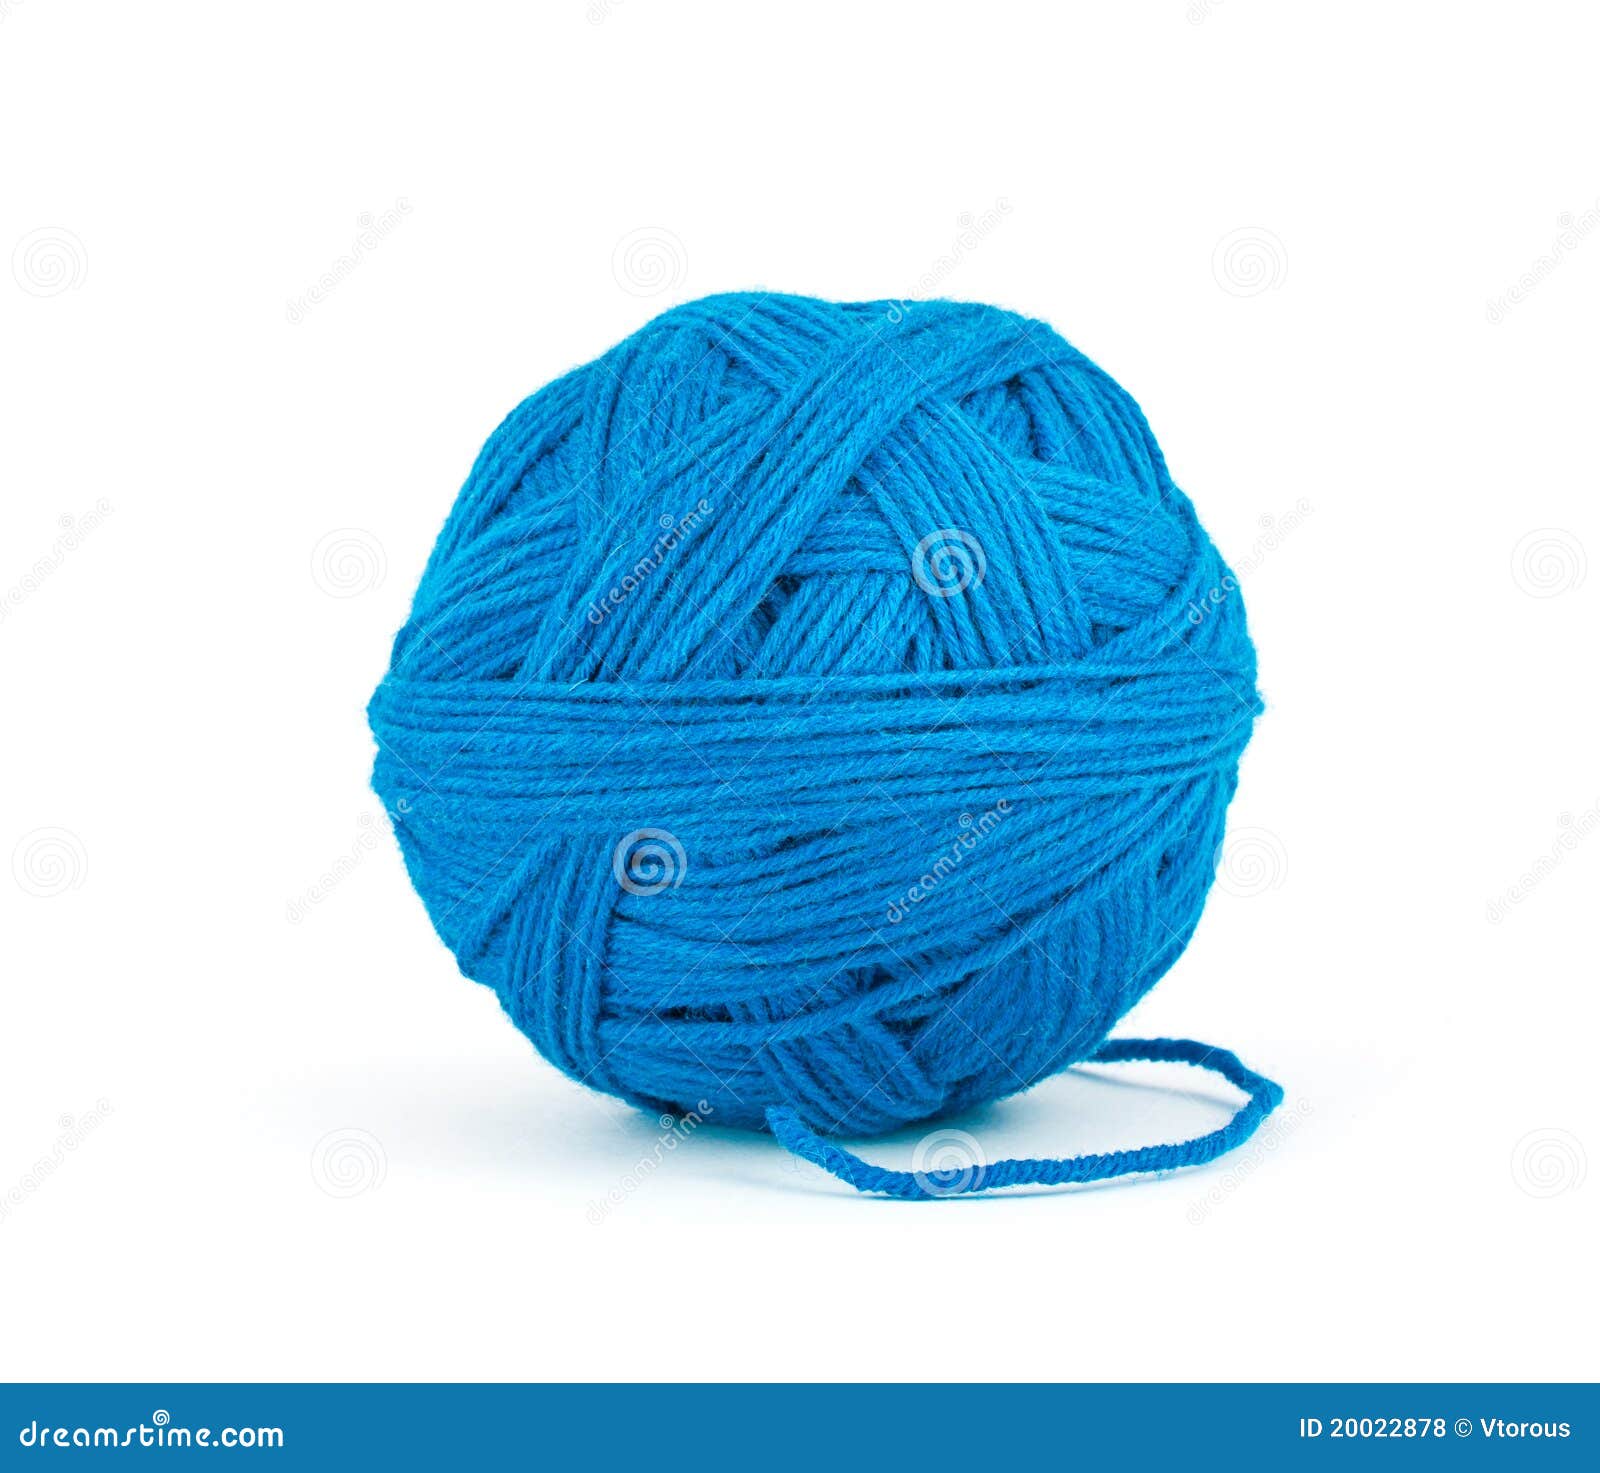 Ball of threads stock photo. Image of fiber, bobbins - 20022878